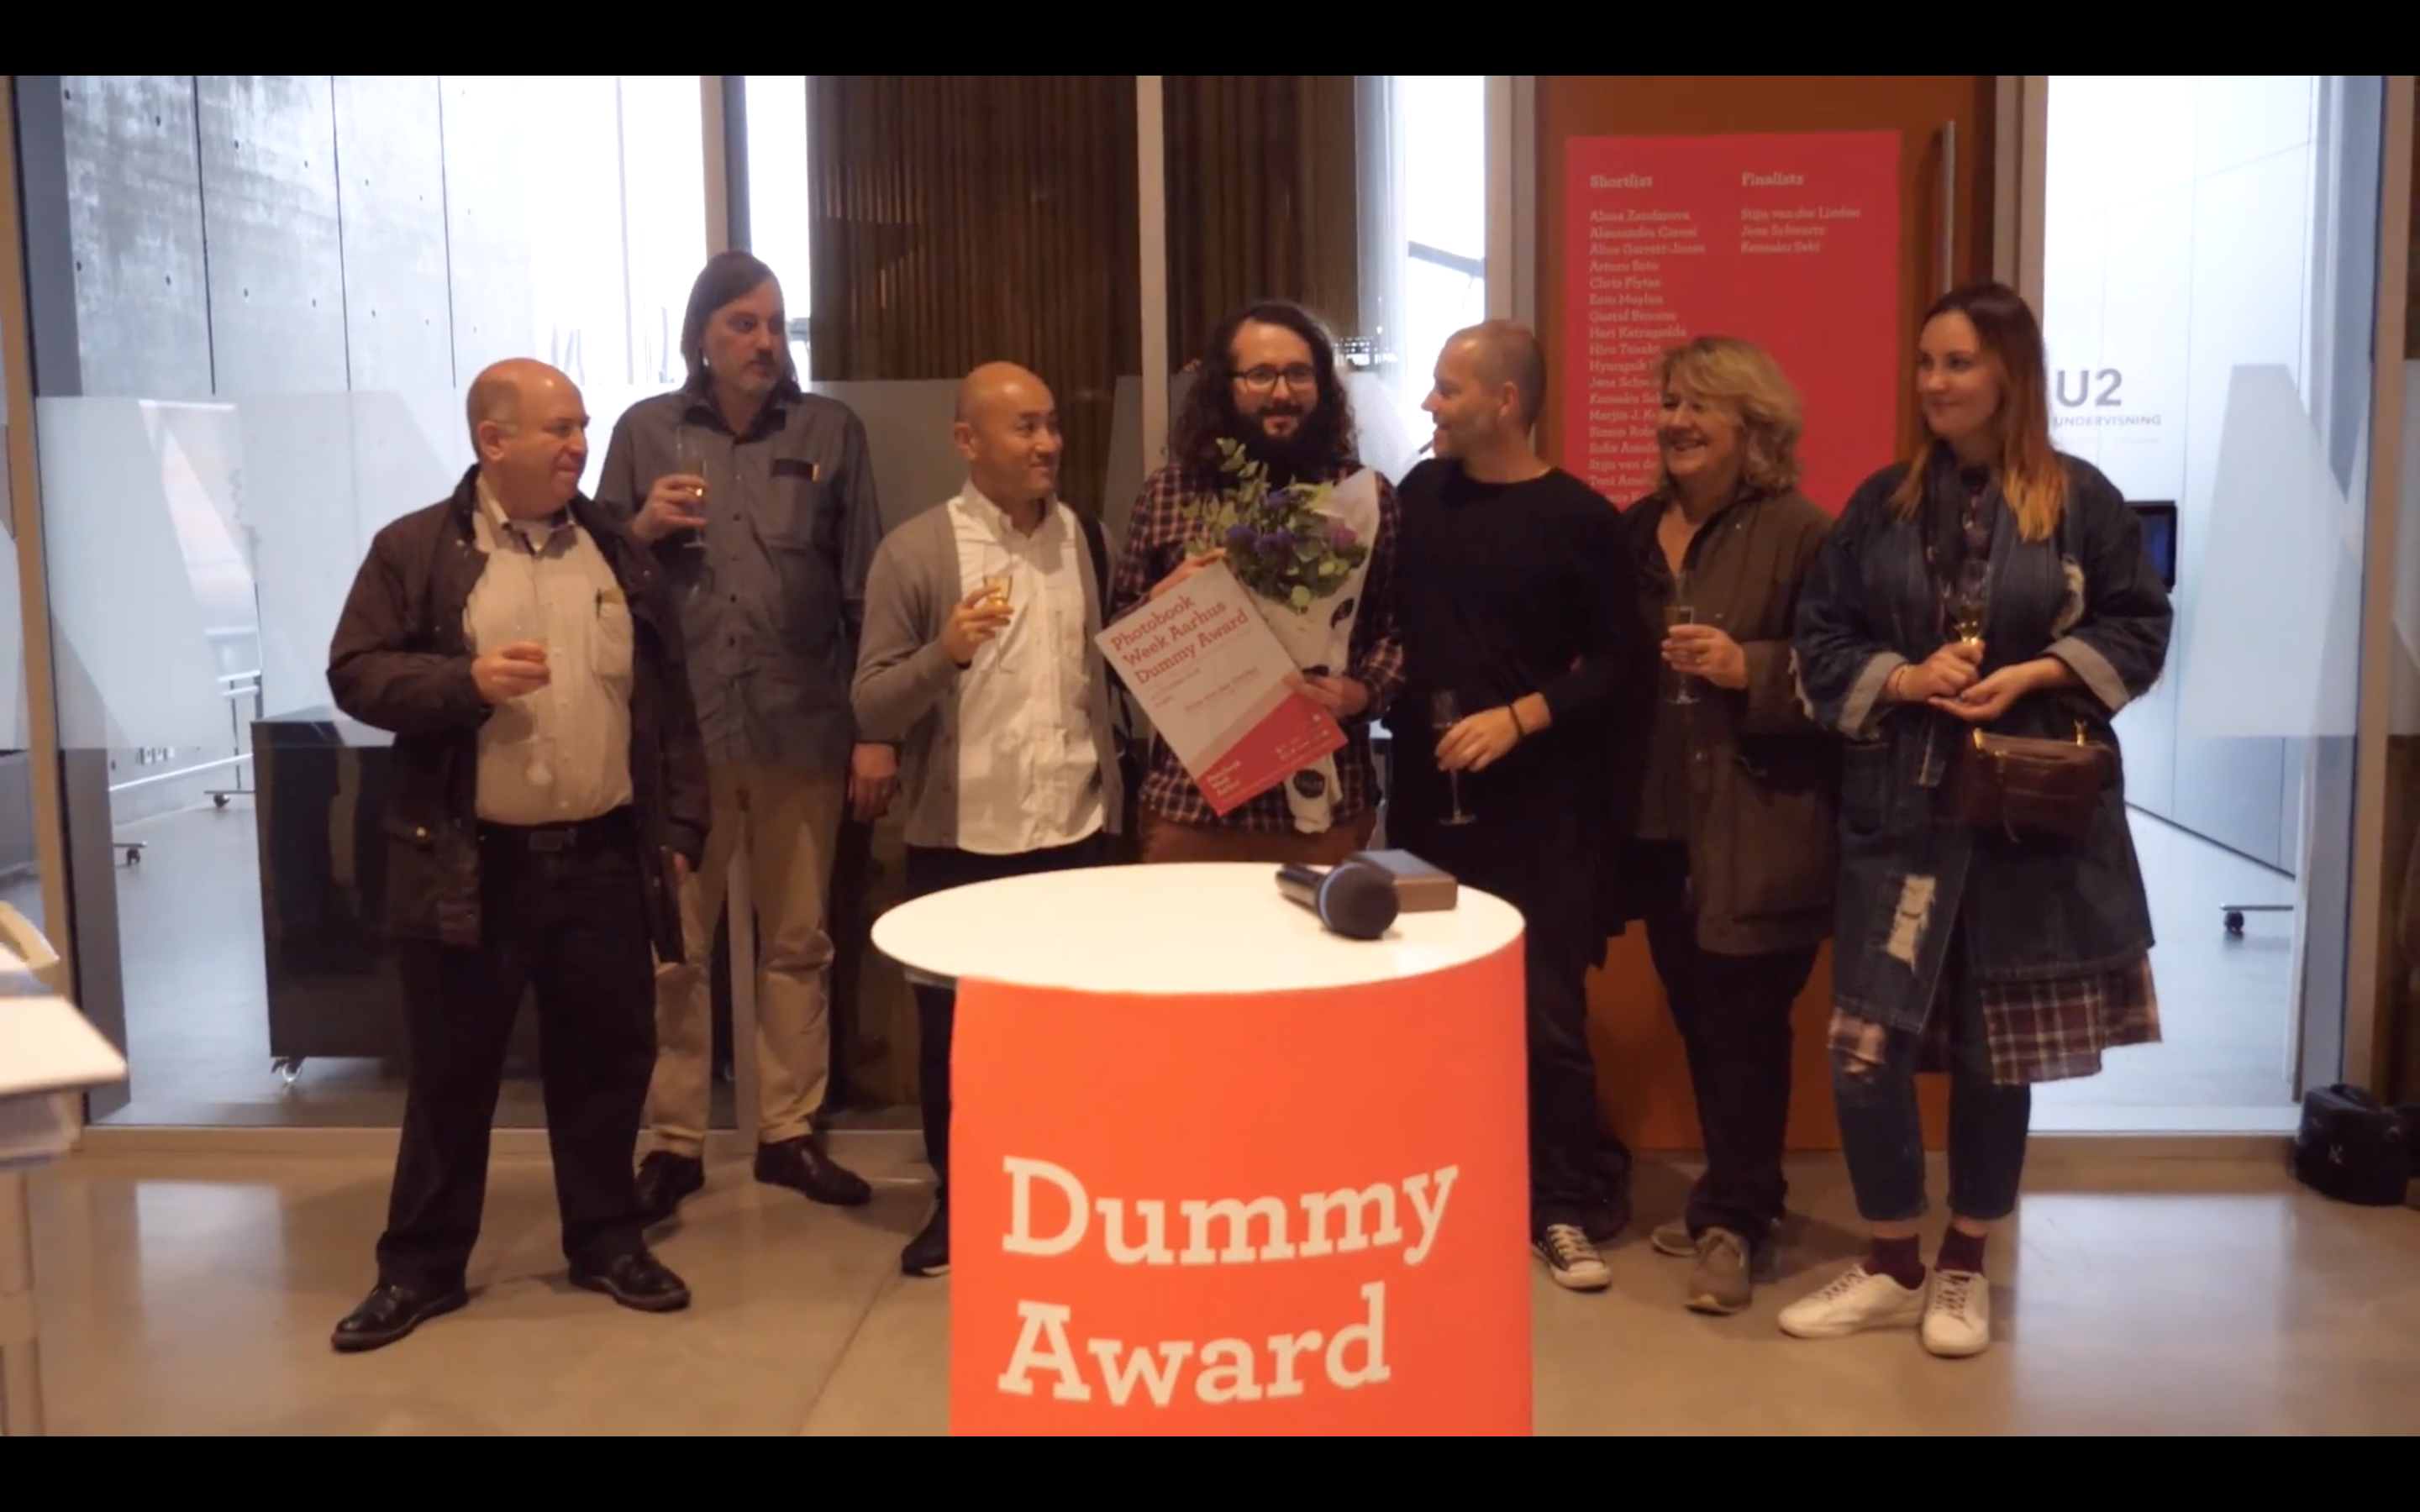 Photobook Week Aarhus announces the winner of Dummy Award 2018